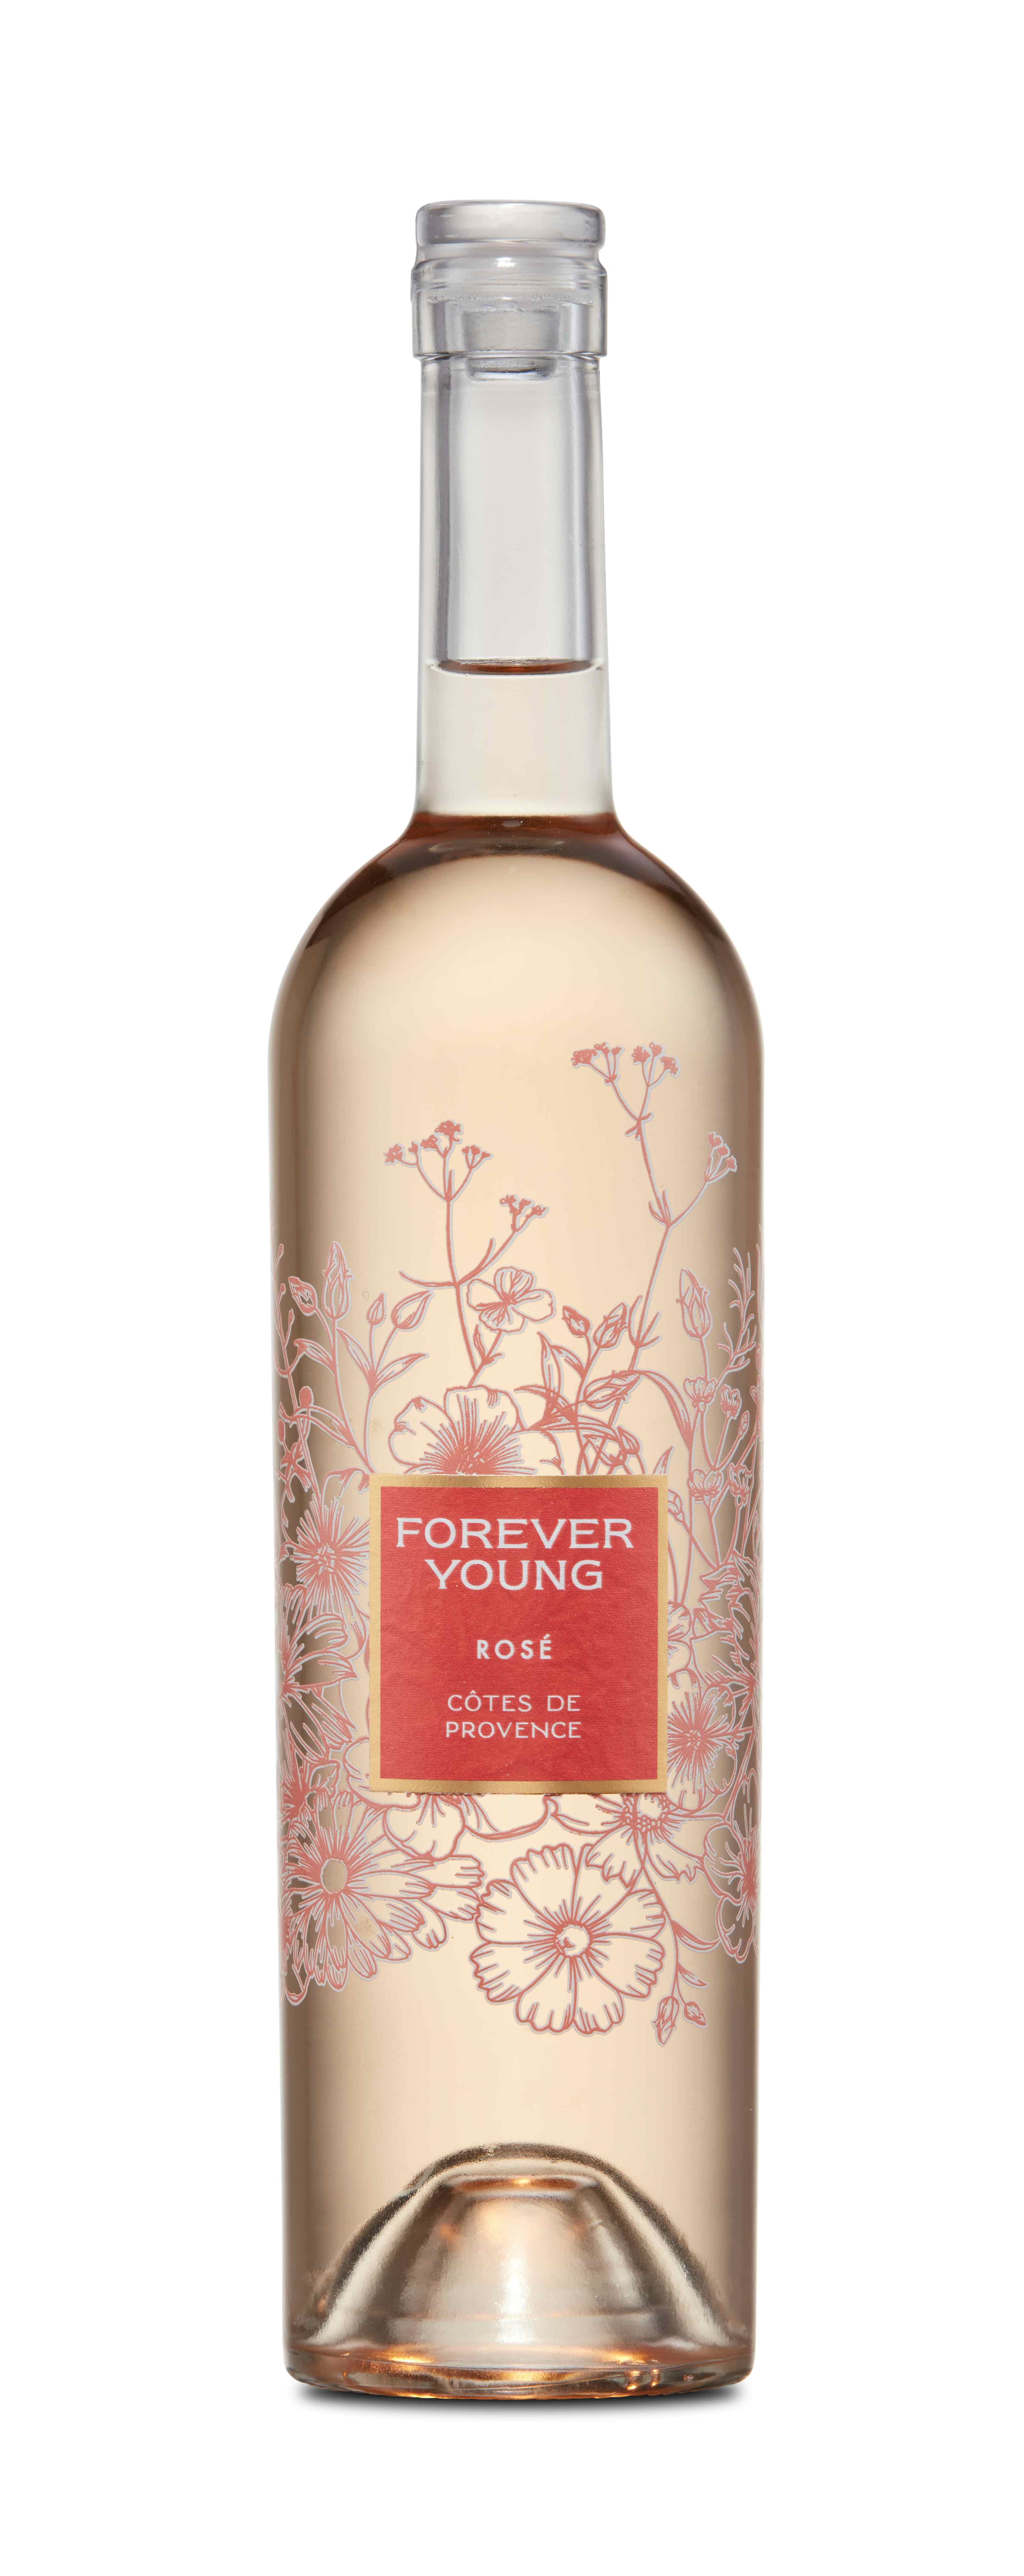 Forever Young Cotes De Provence Rosé